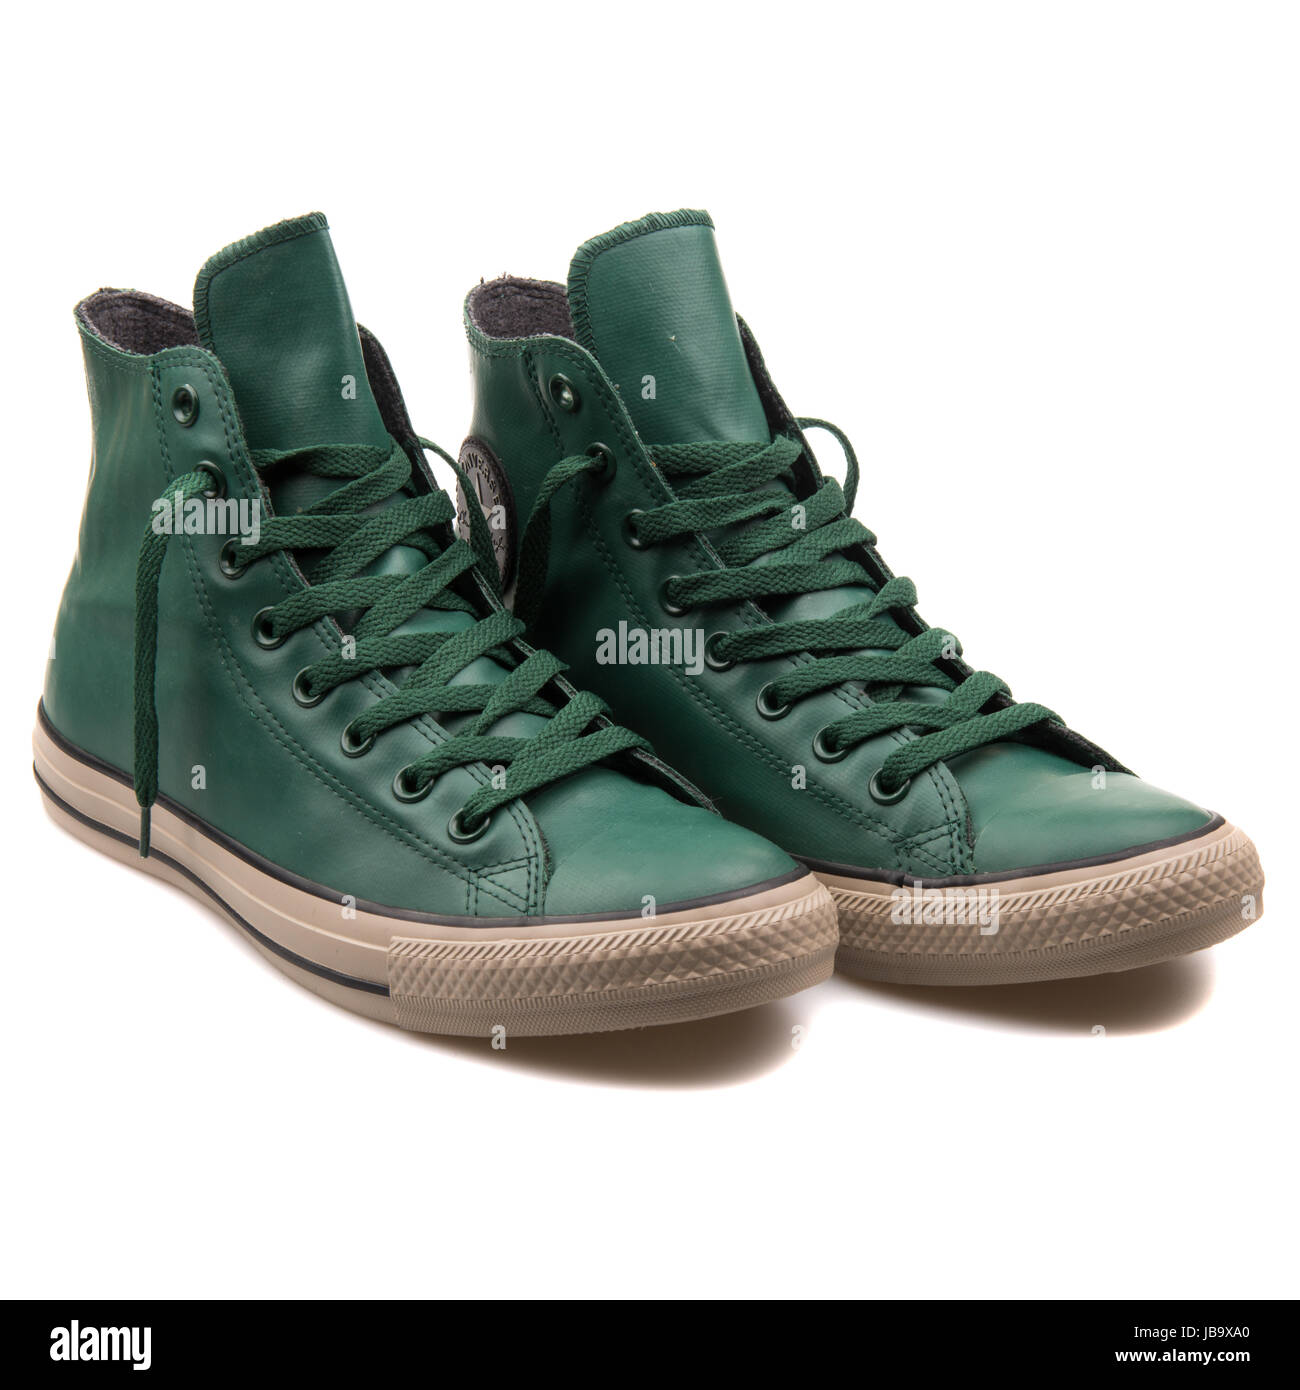 Converse Chuck Taylor All Star Hi Chaussures unisexe vert sombre - 149771C Banque D'Images